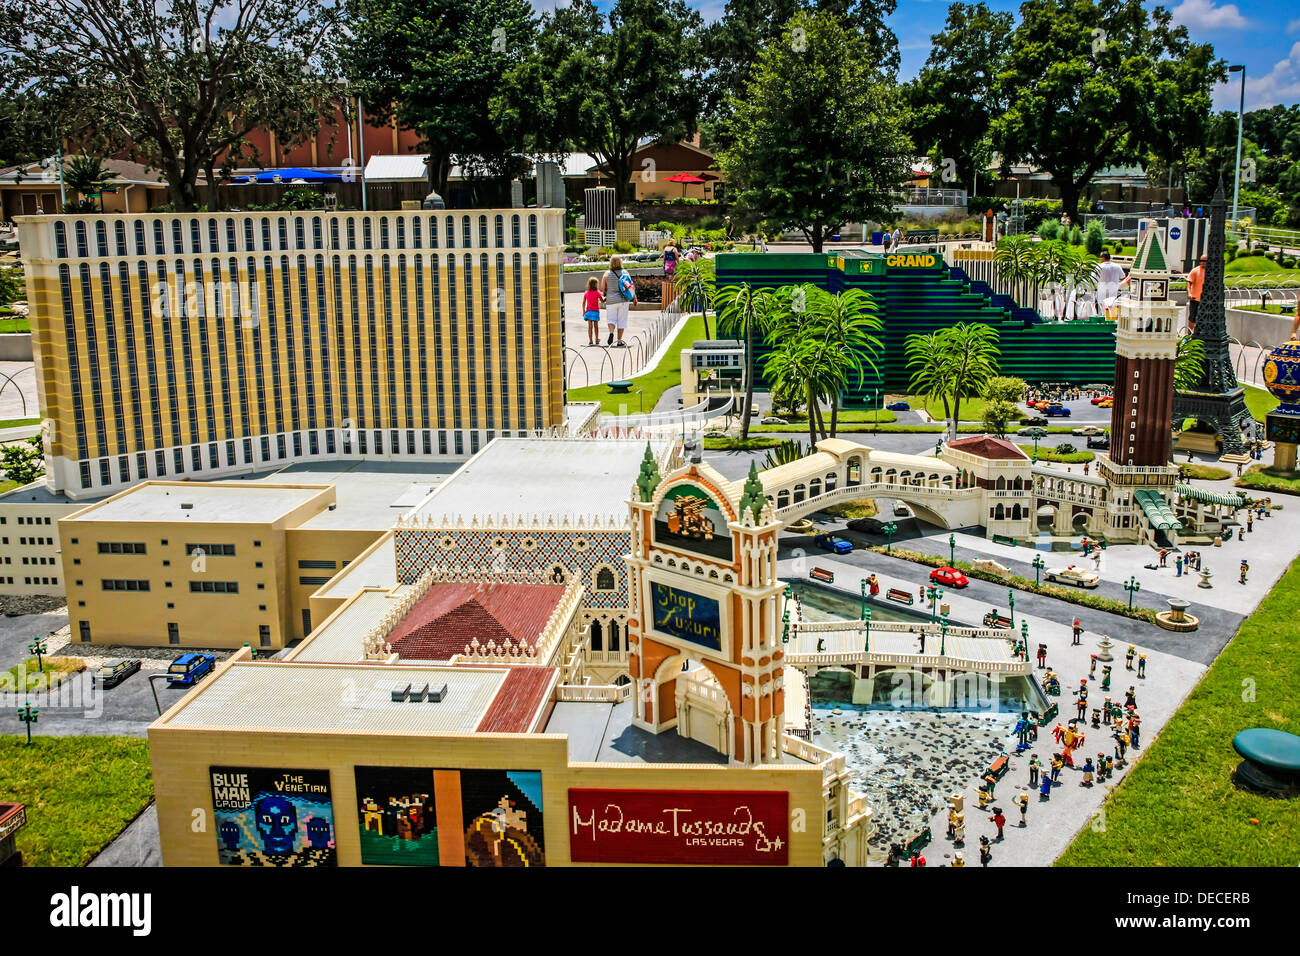 Around the World in Legoland - Las Vegas Stock Photo - Alamy